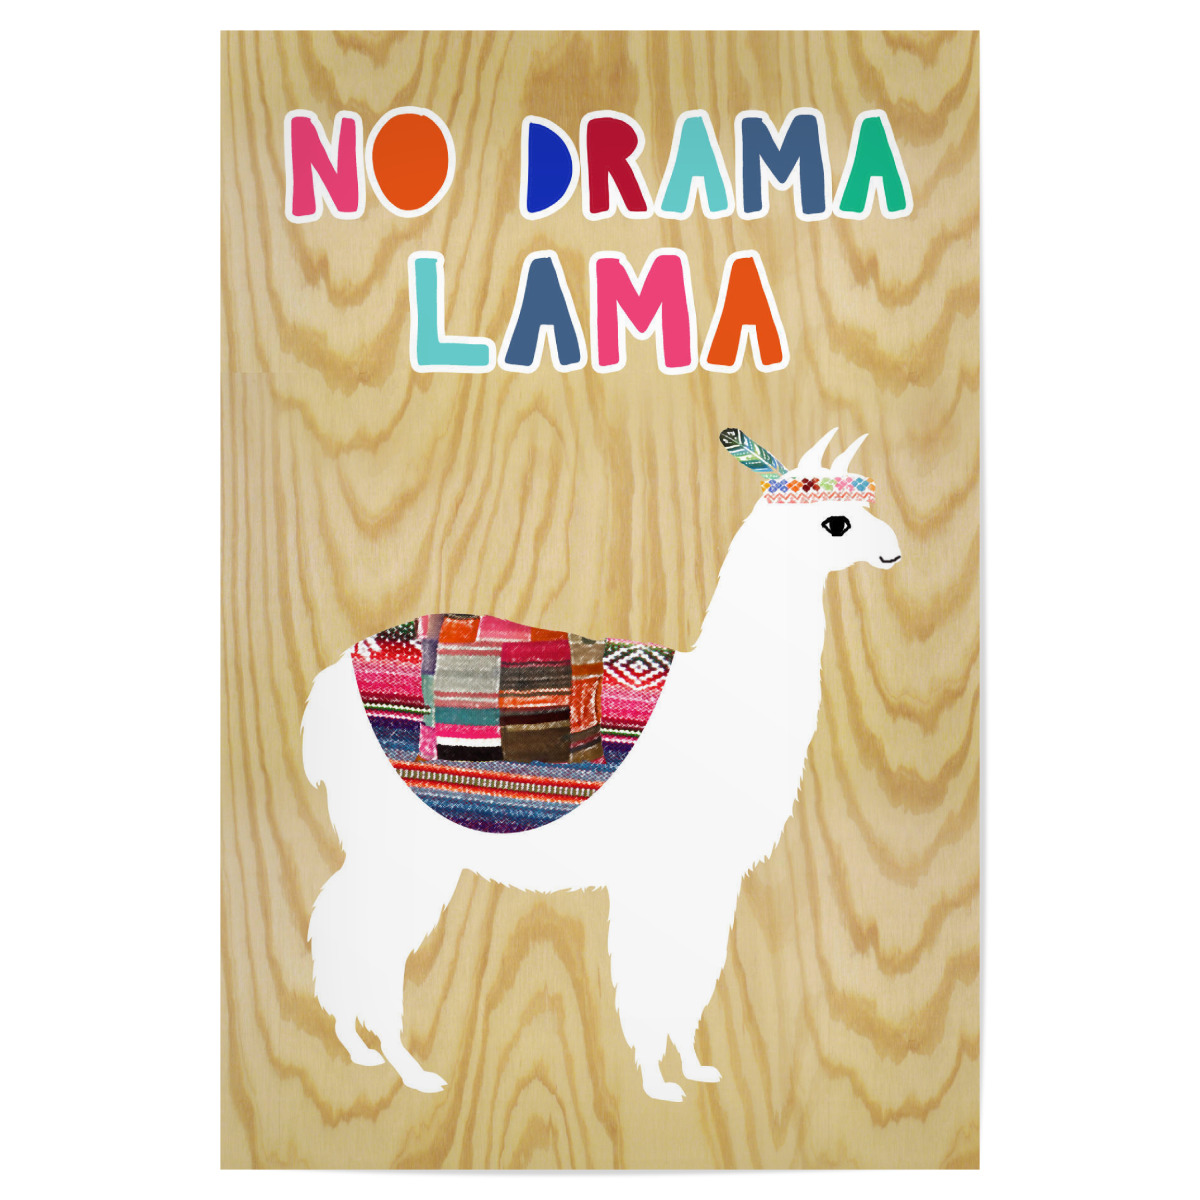 No drama Lama als Poster bei artboxONE kaufen